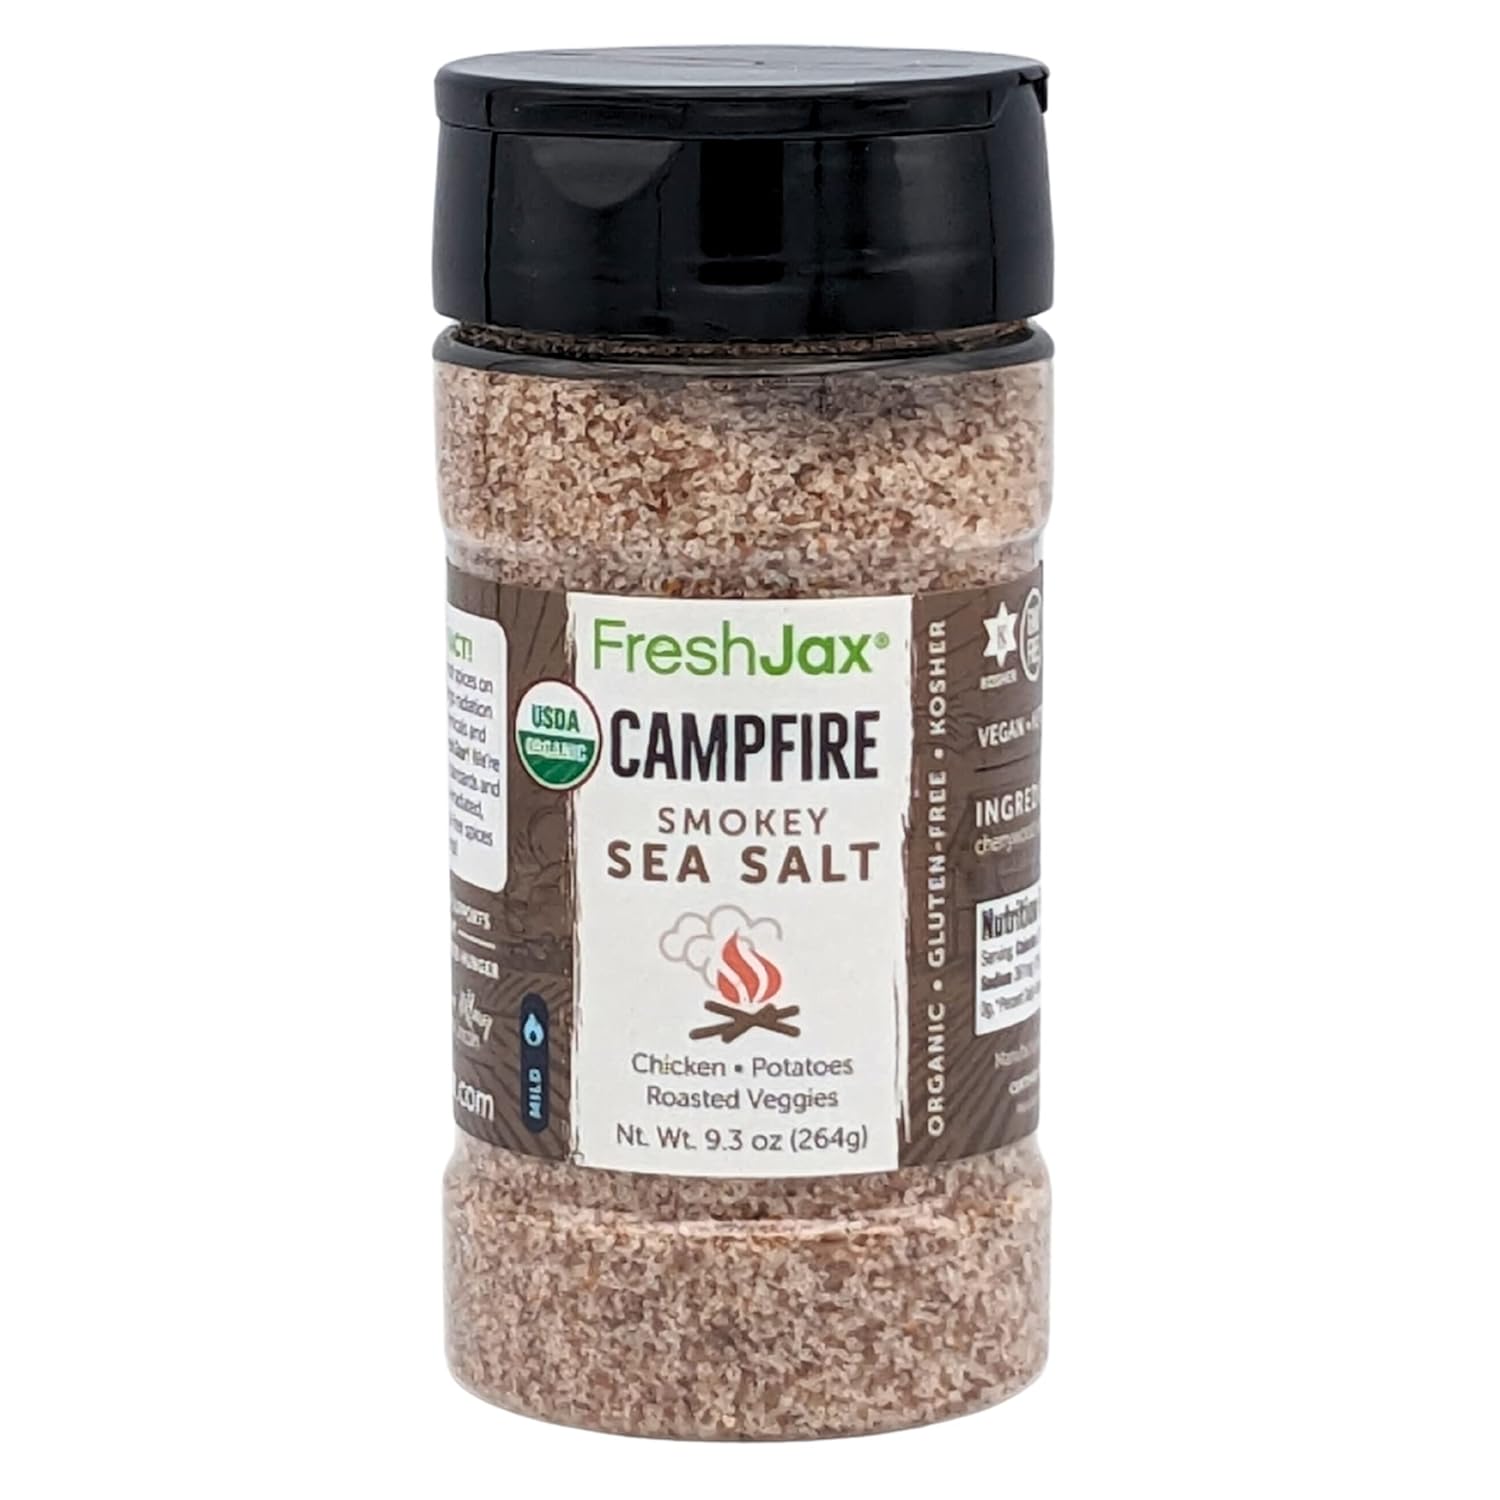 FreshJax Organic Campfire Smokey Sea Salt (9.3 oz Bottle) Non GMO, Gluten Free, Keto, Paleo, No Preservatives Smoked Organic Sea Salt | Handcrafted in Jacksonville